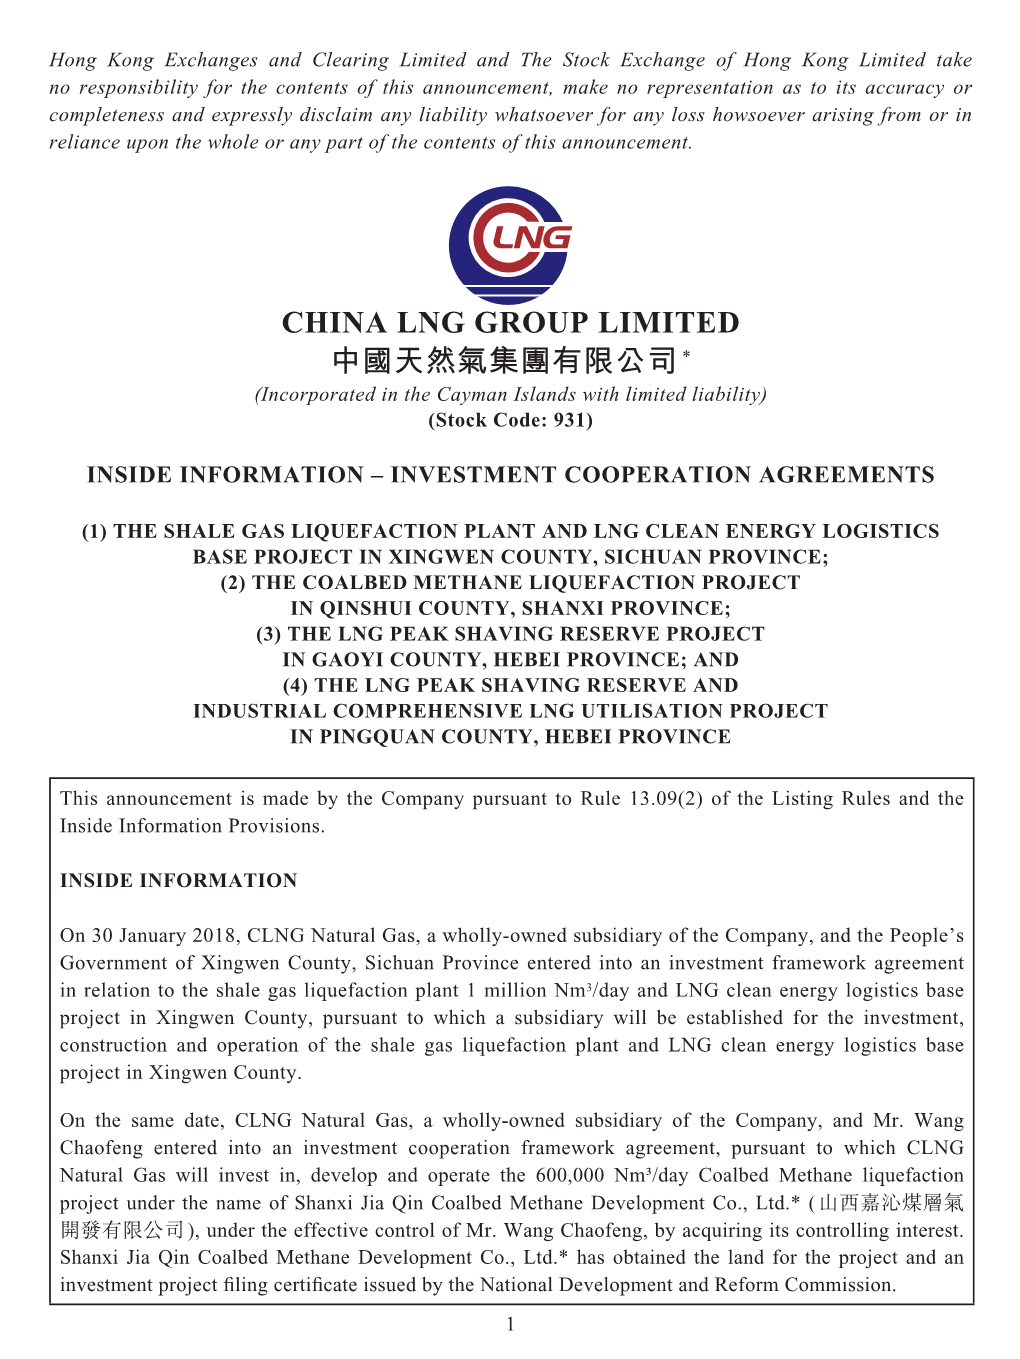 China Lng Group Limited 中國天然氣集團有限公司*